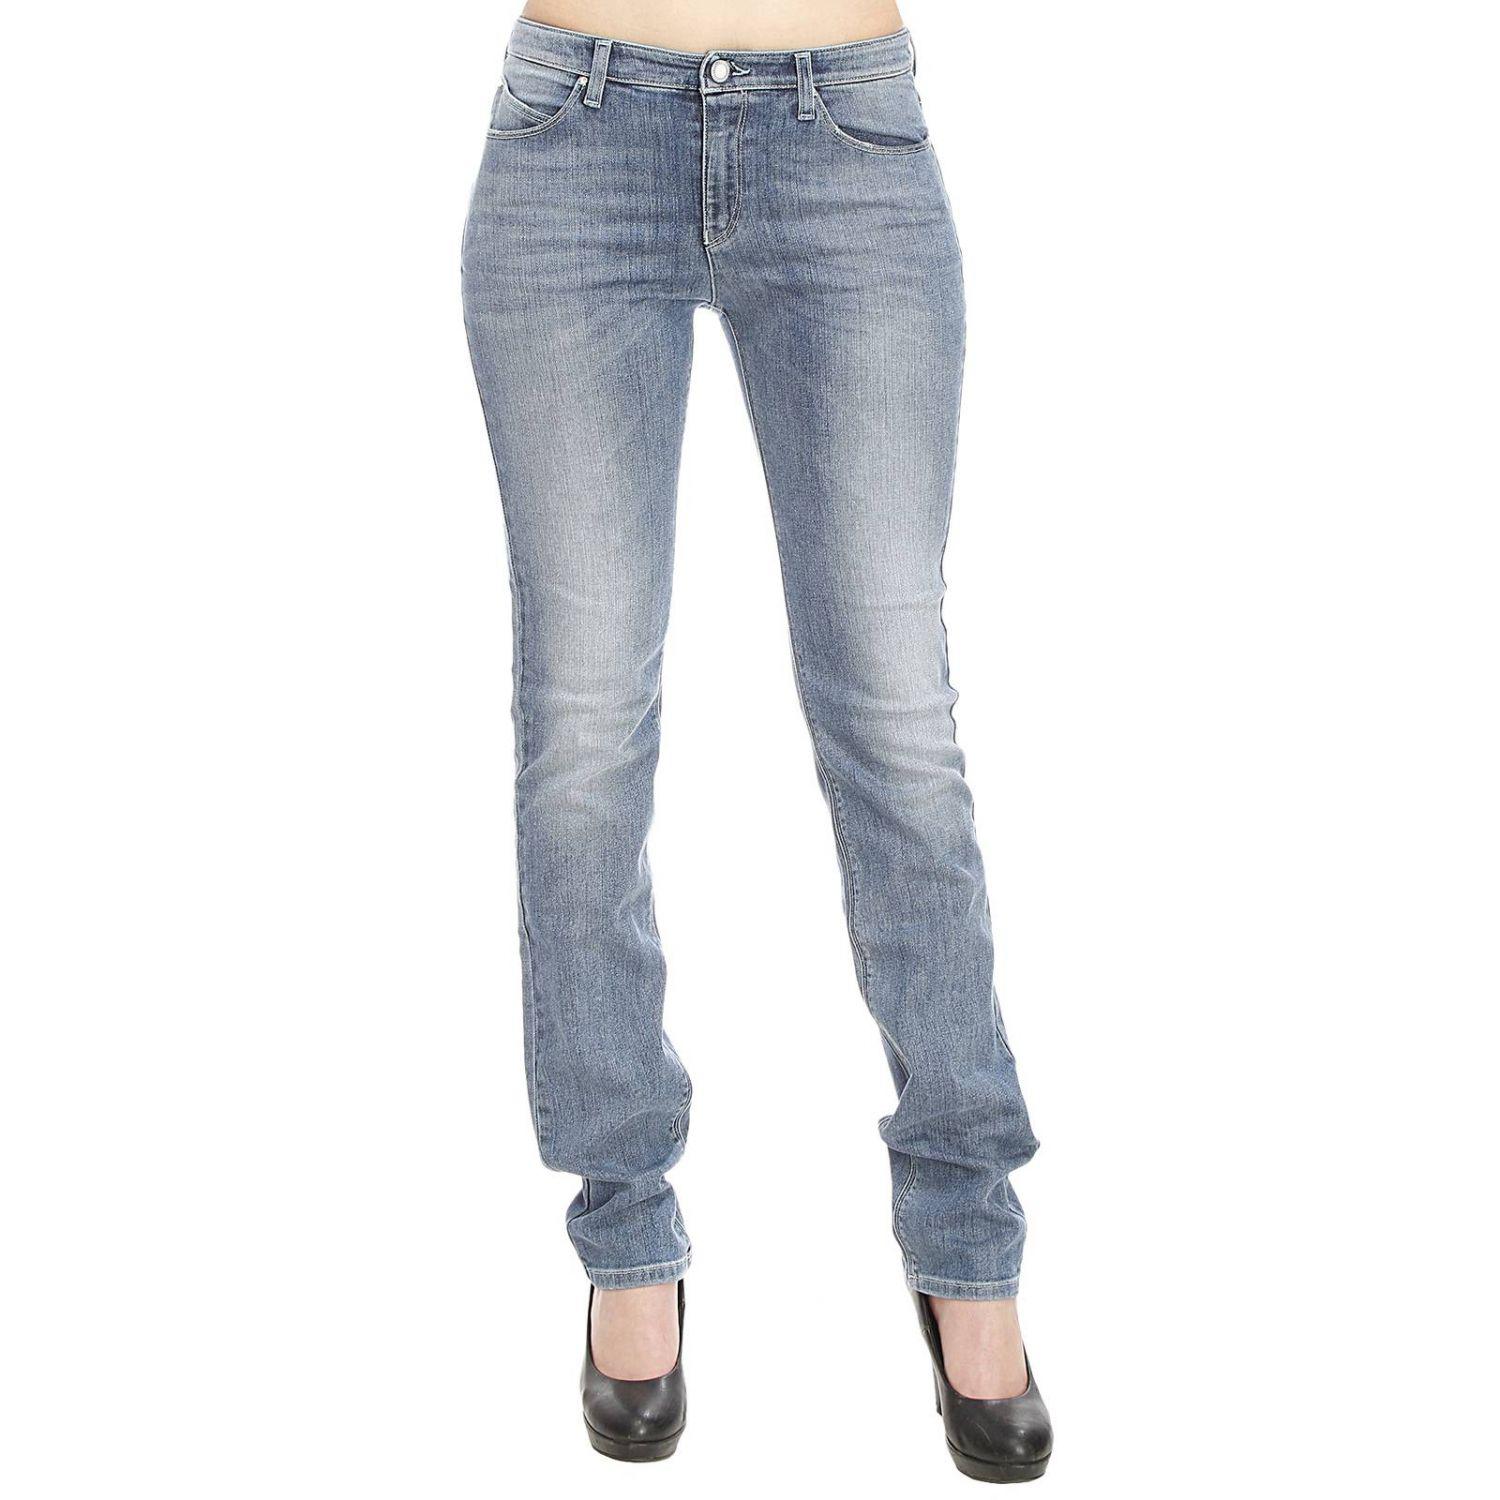 armani womens jeans